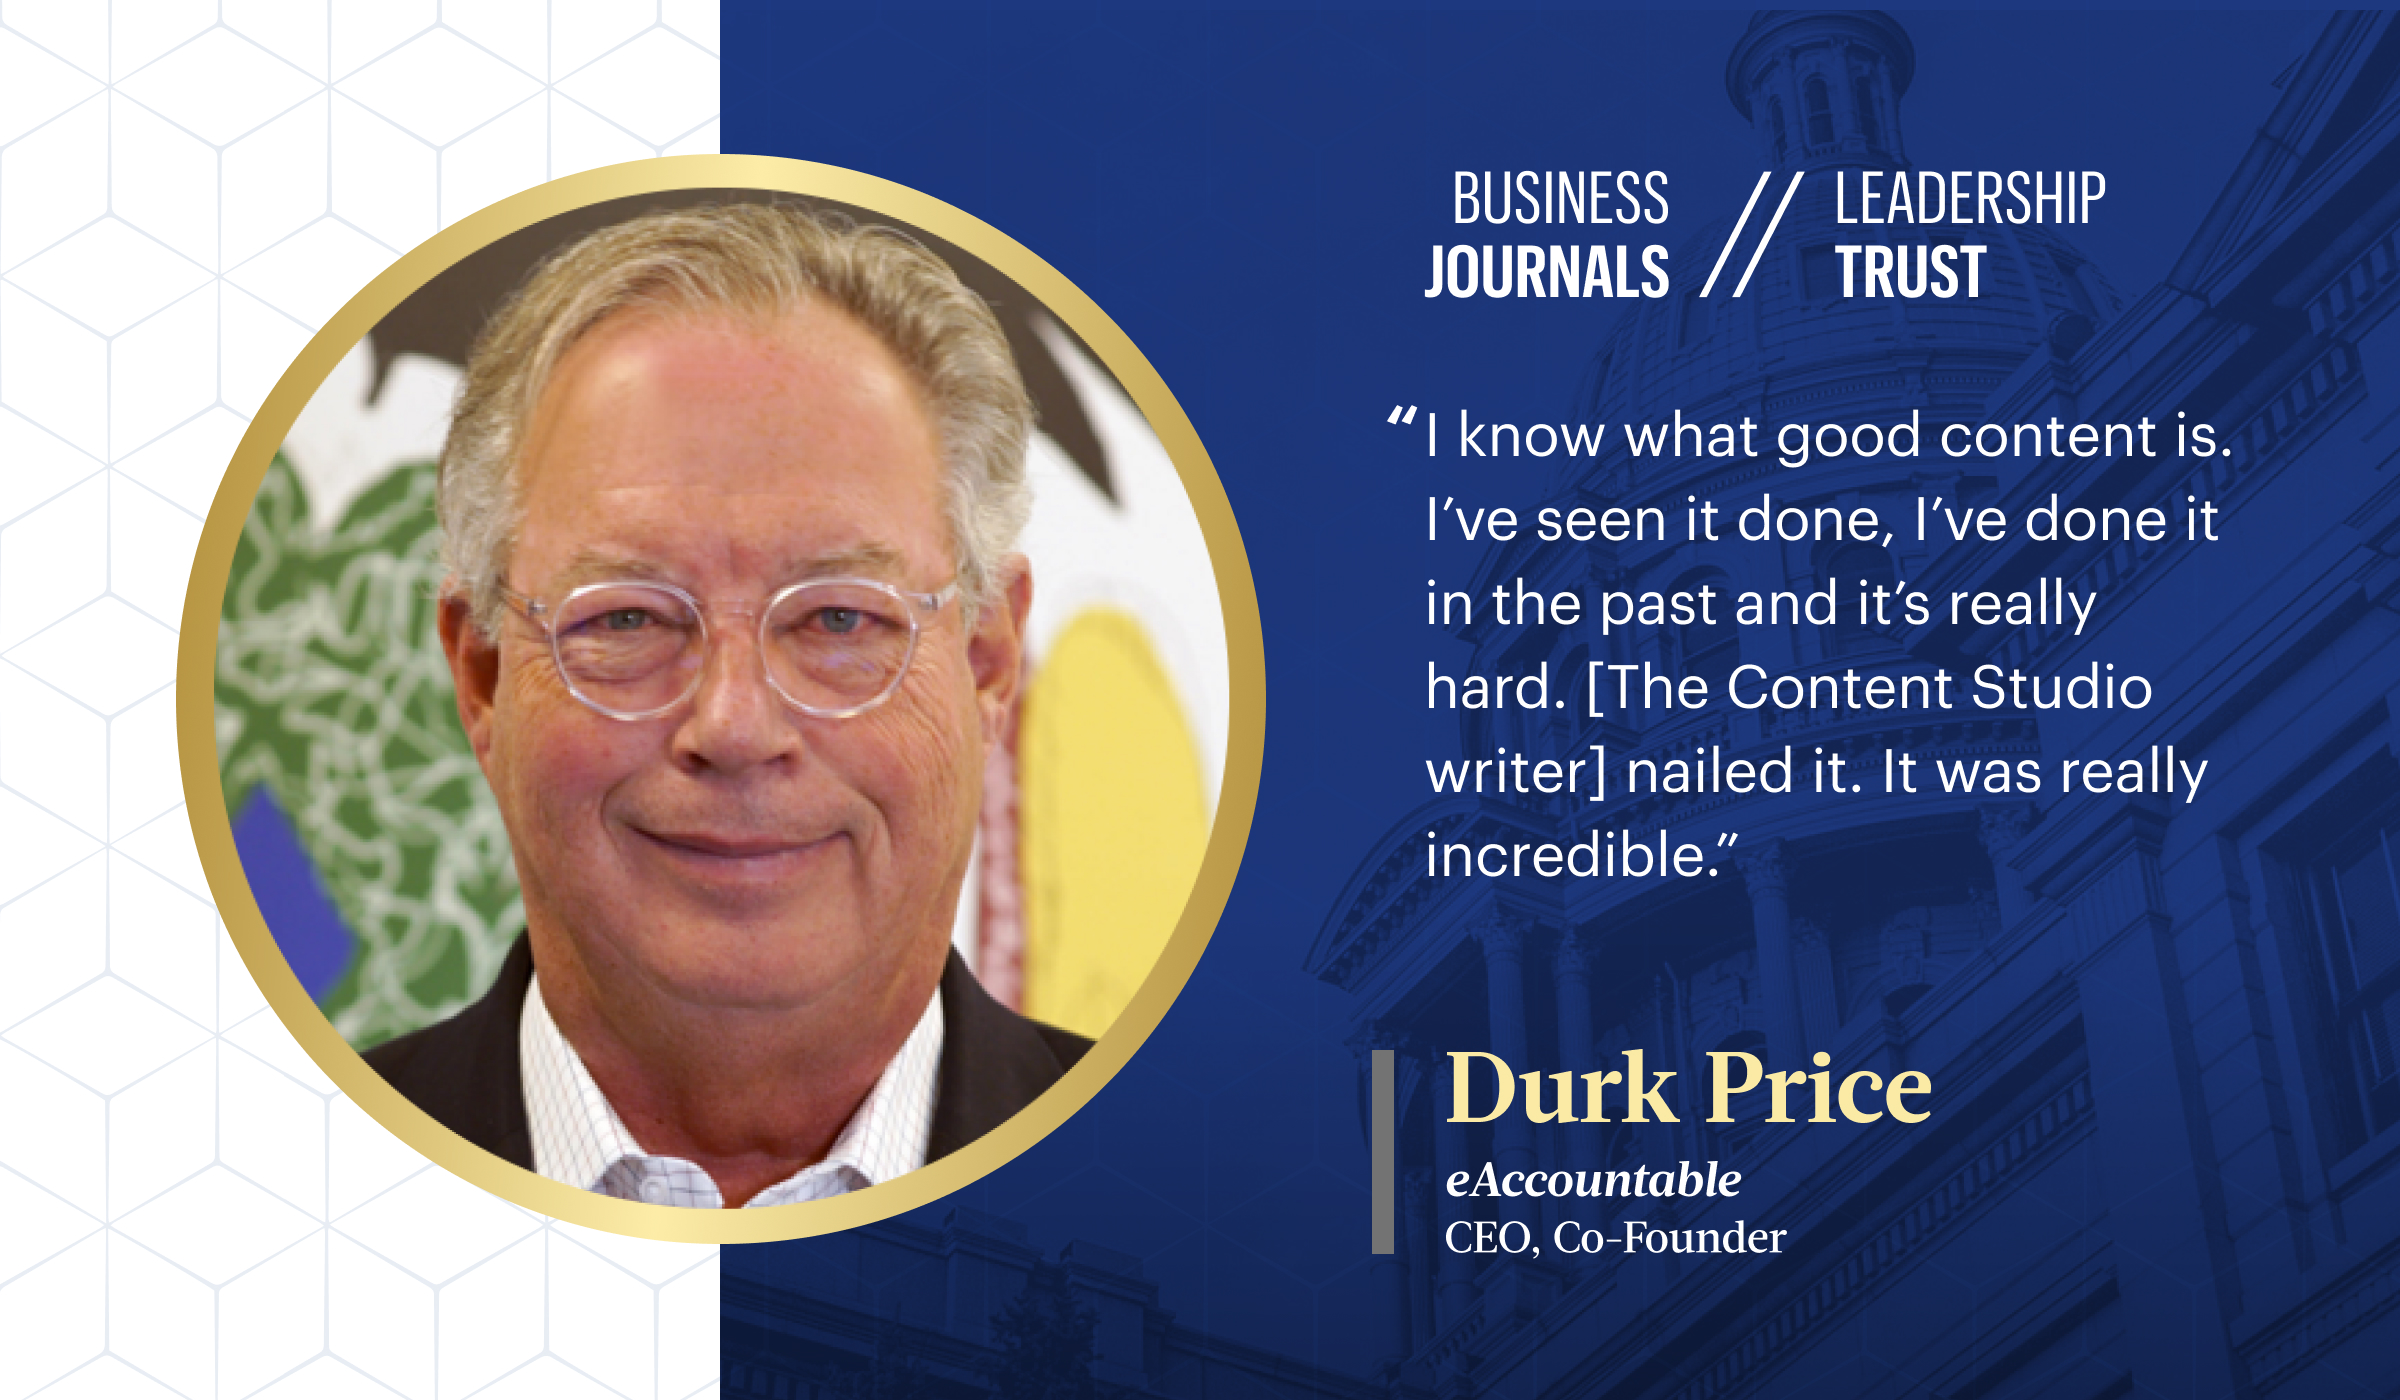 Durk Price Business Journals Leadership Trust